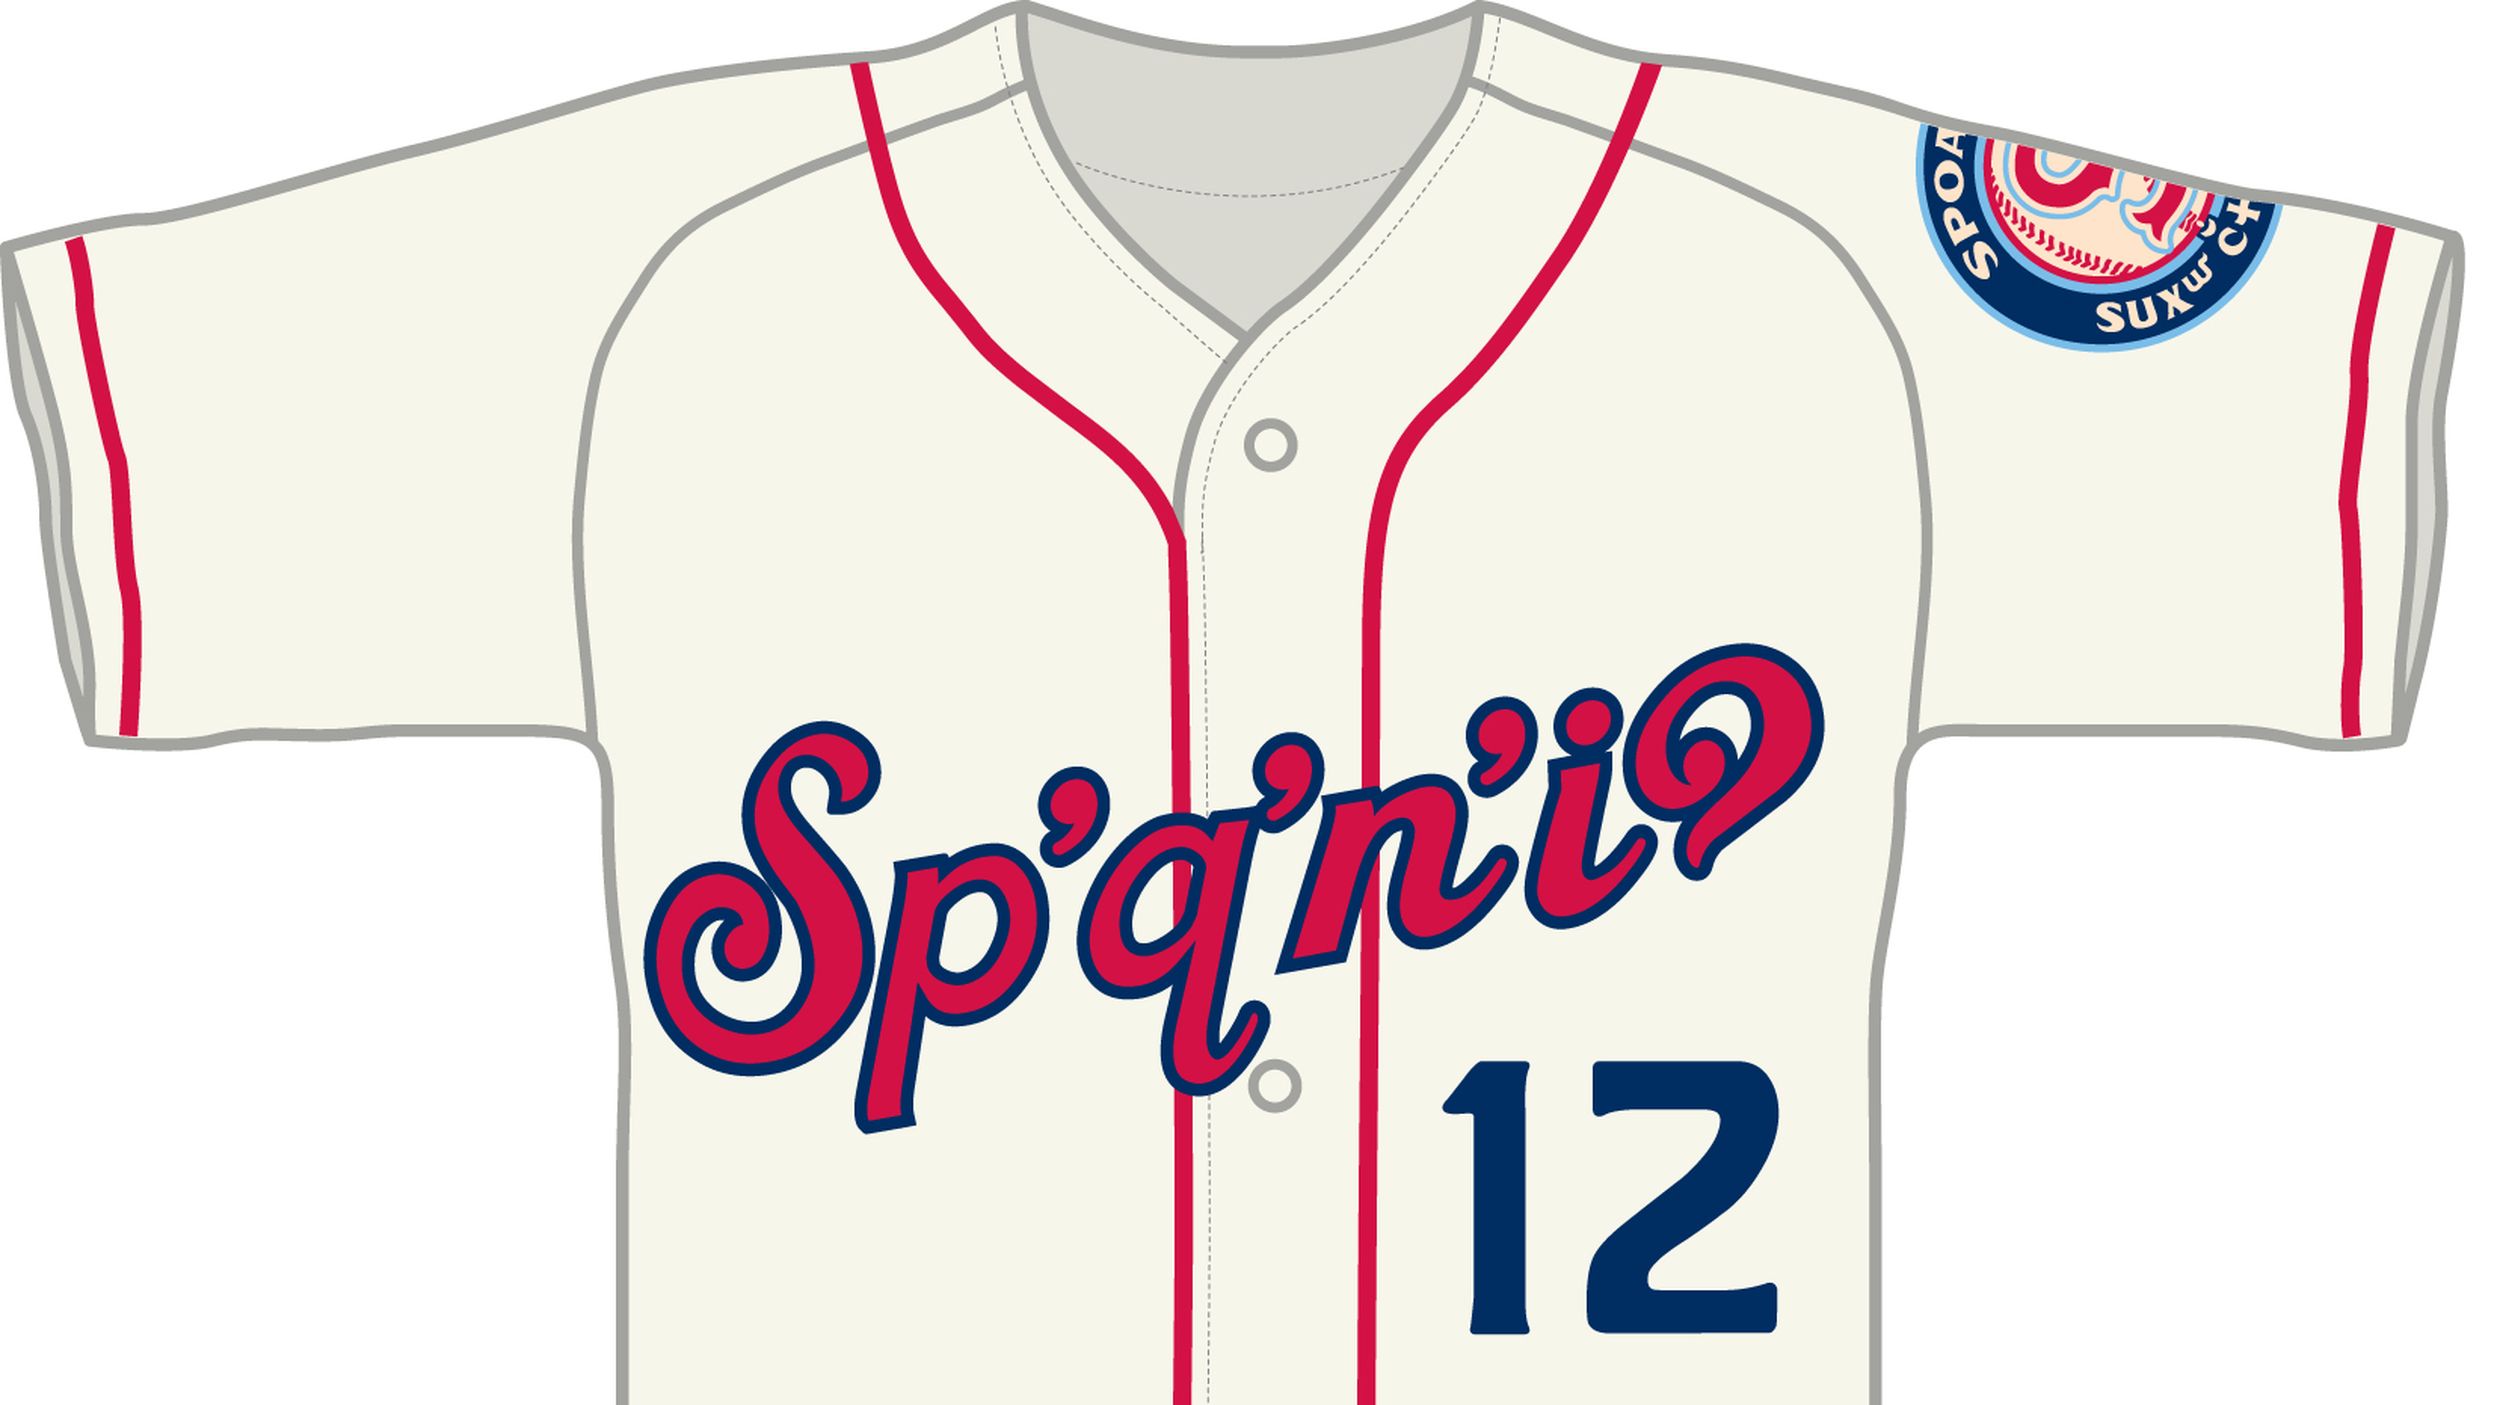 Spokane Indians - Spokane native and Hall of Fame second baseman